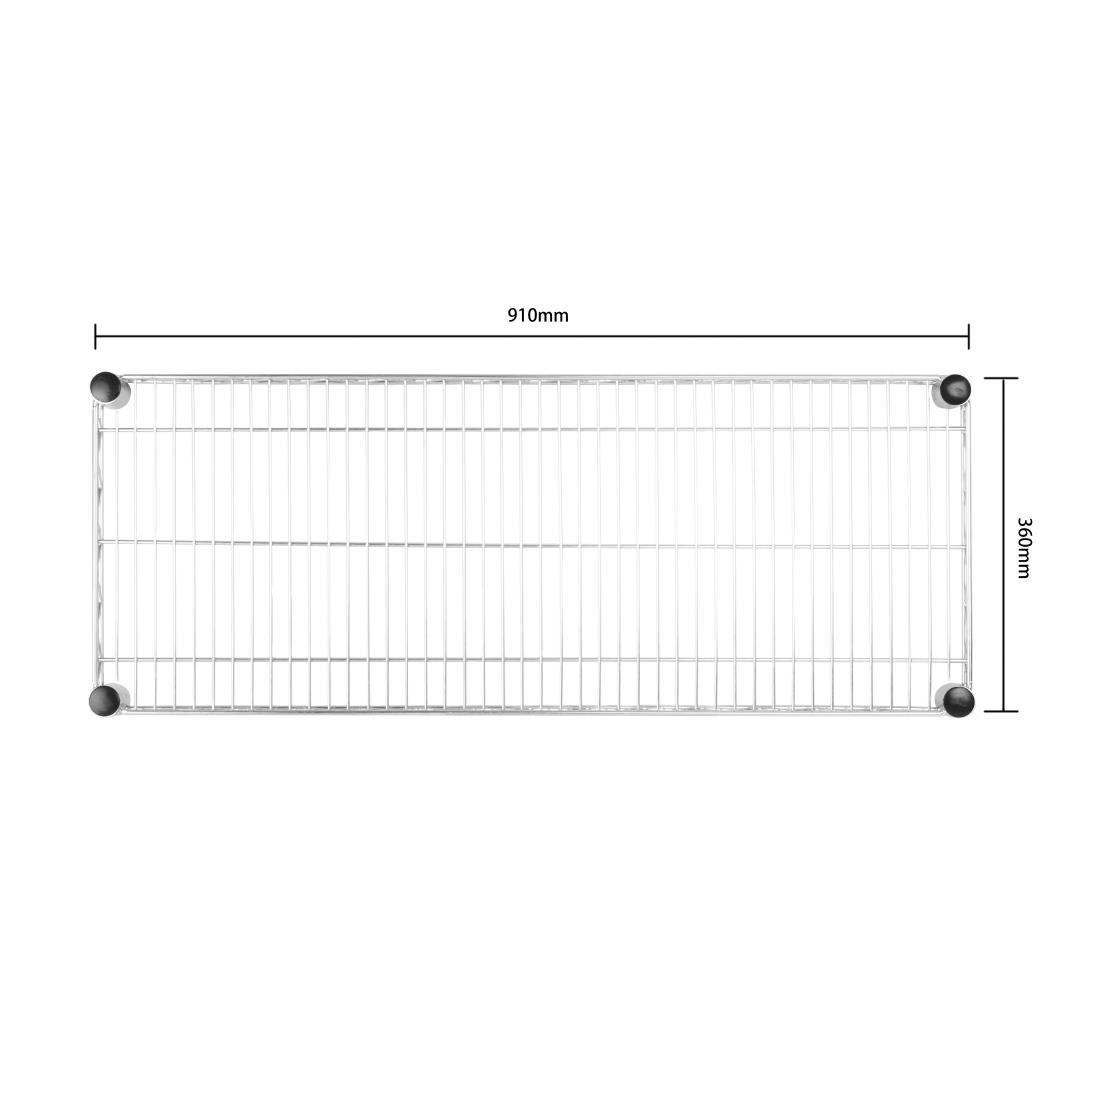 Vogue Metal Wire Wall Shelf 910mm - U201  - 5